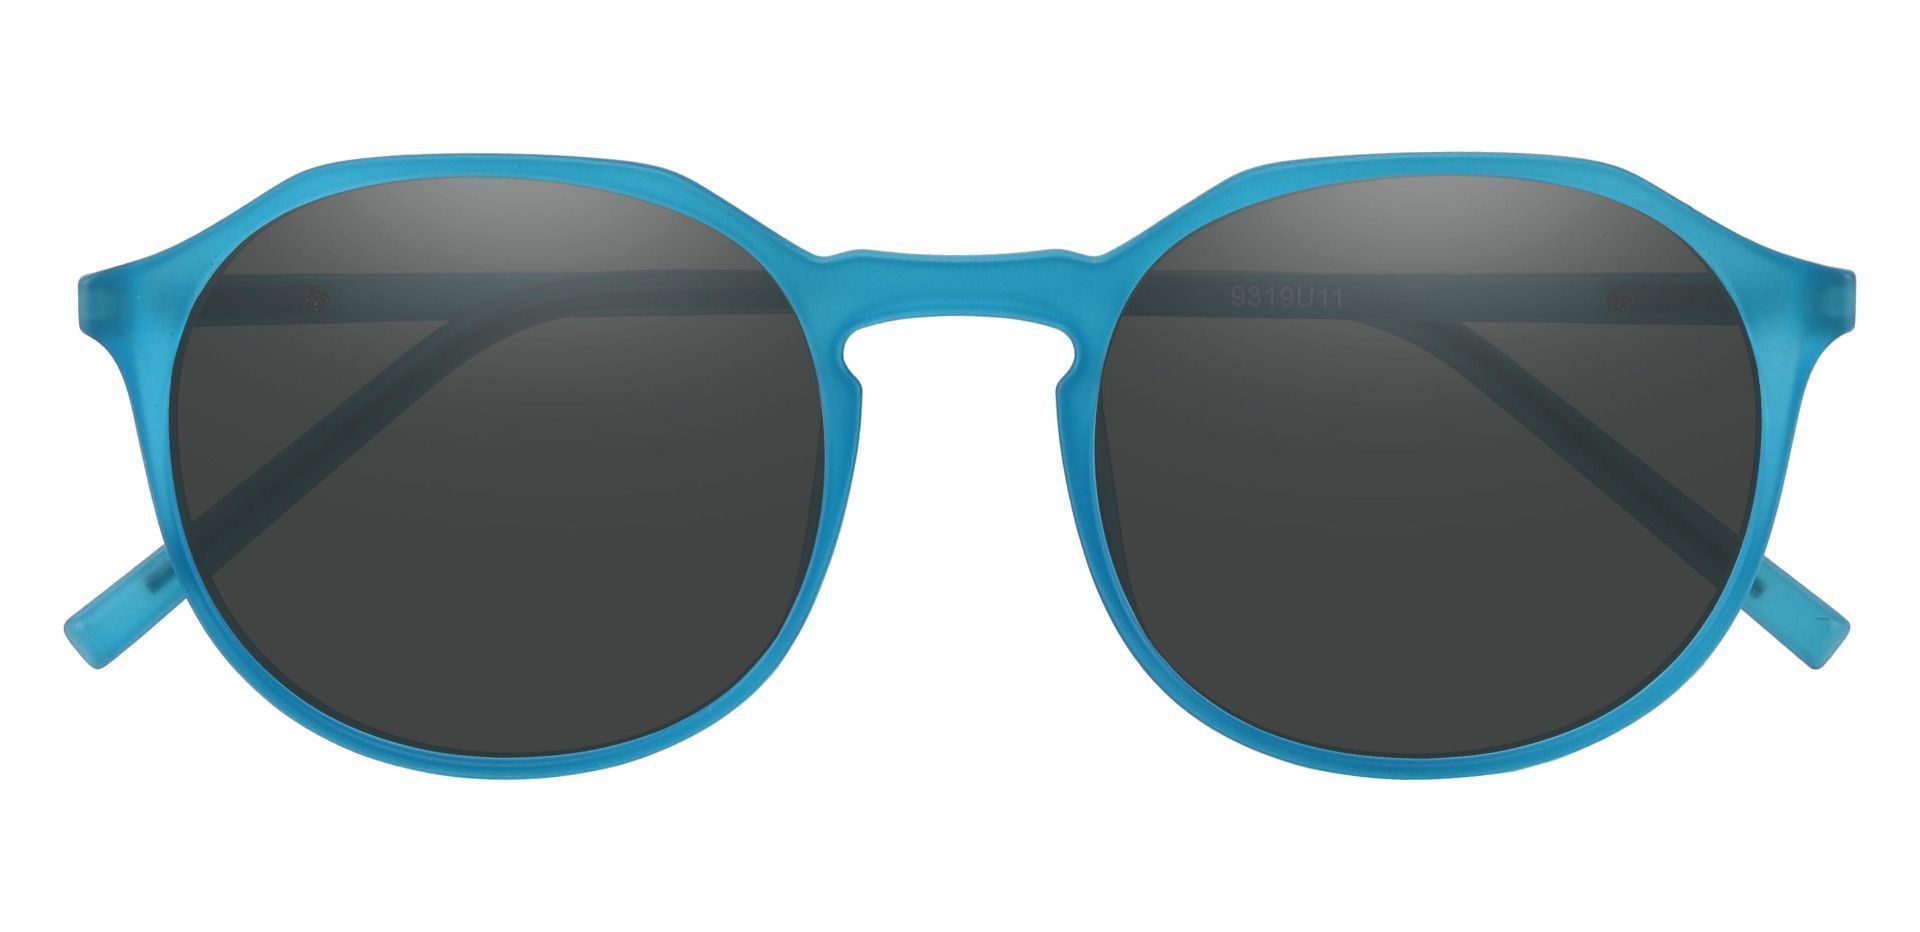 Belvidere Geometric Non-Rx Sunglasses - Blue Frame With Gray Lenses